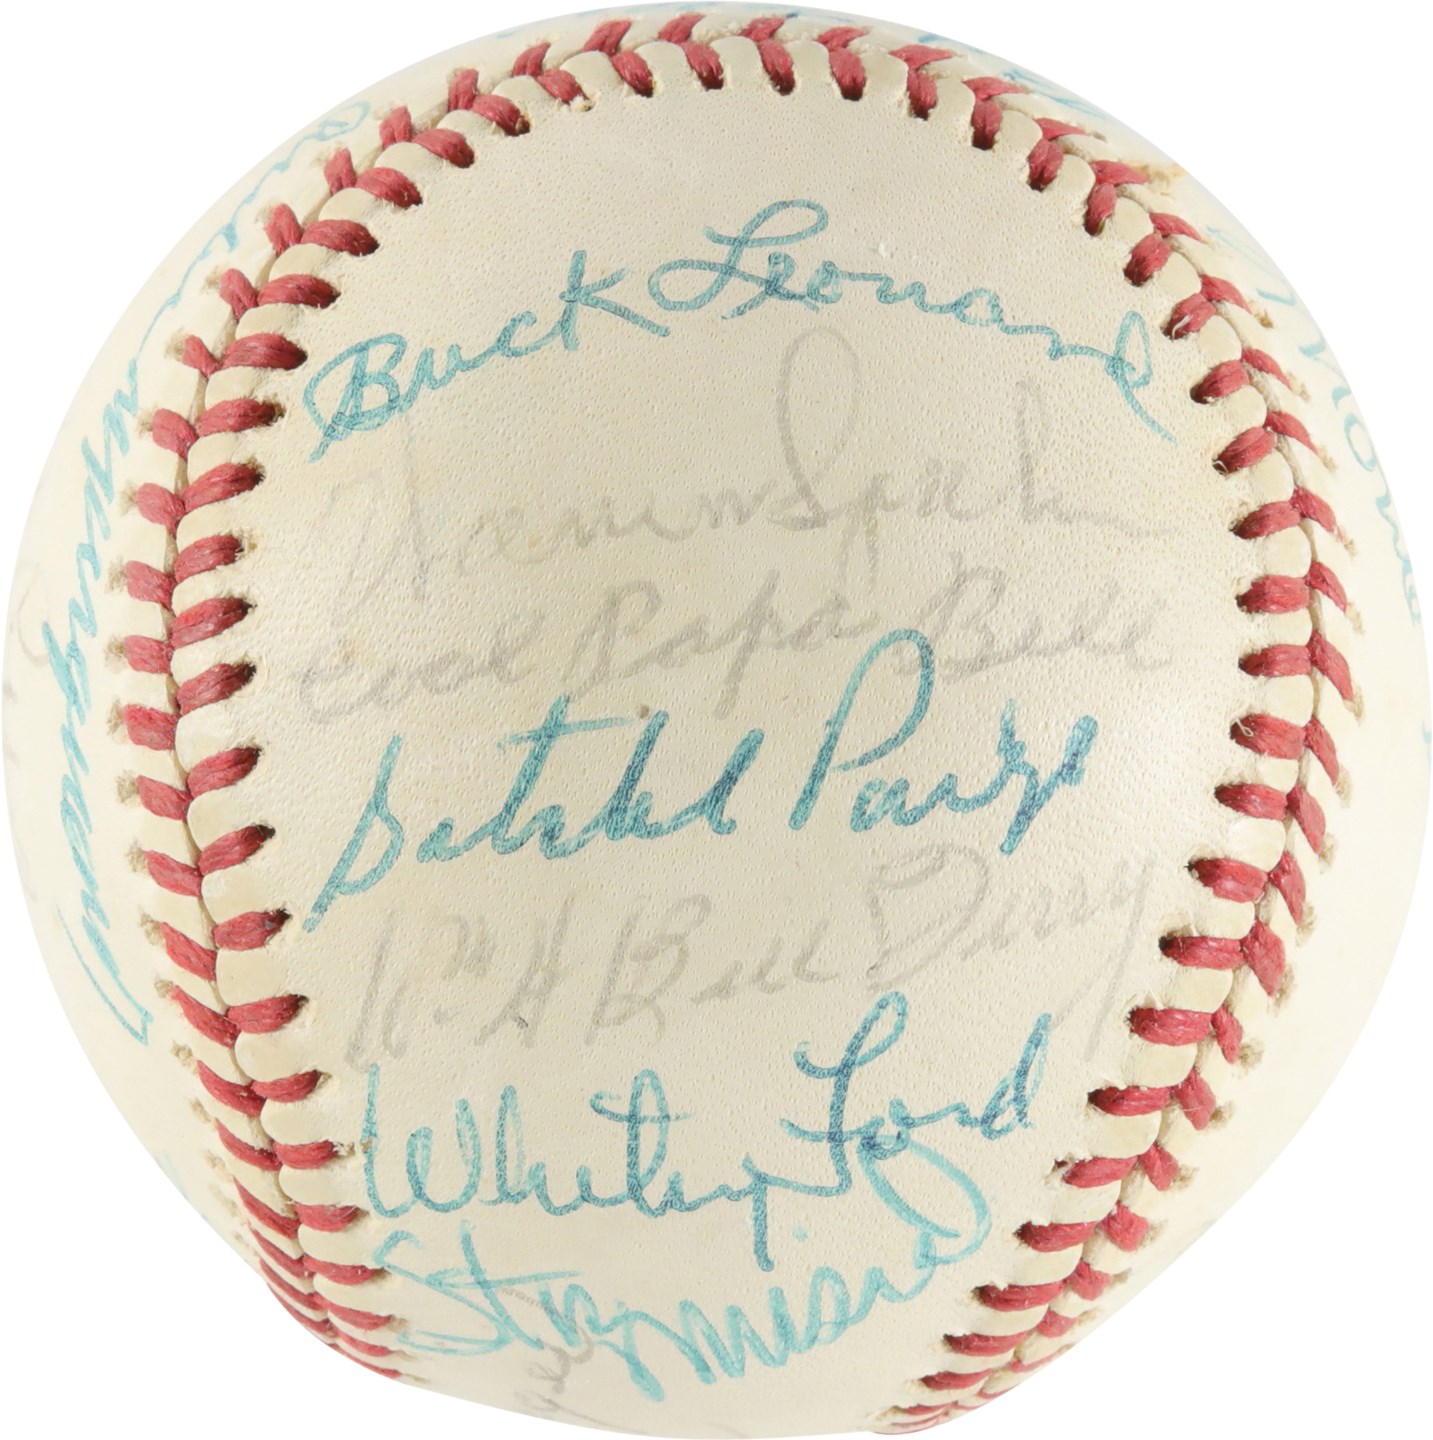 Baseball Autographs - 1974 HOFers & Stars Multi-Signed Baseball w/Paige & Mantle (PSA)